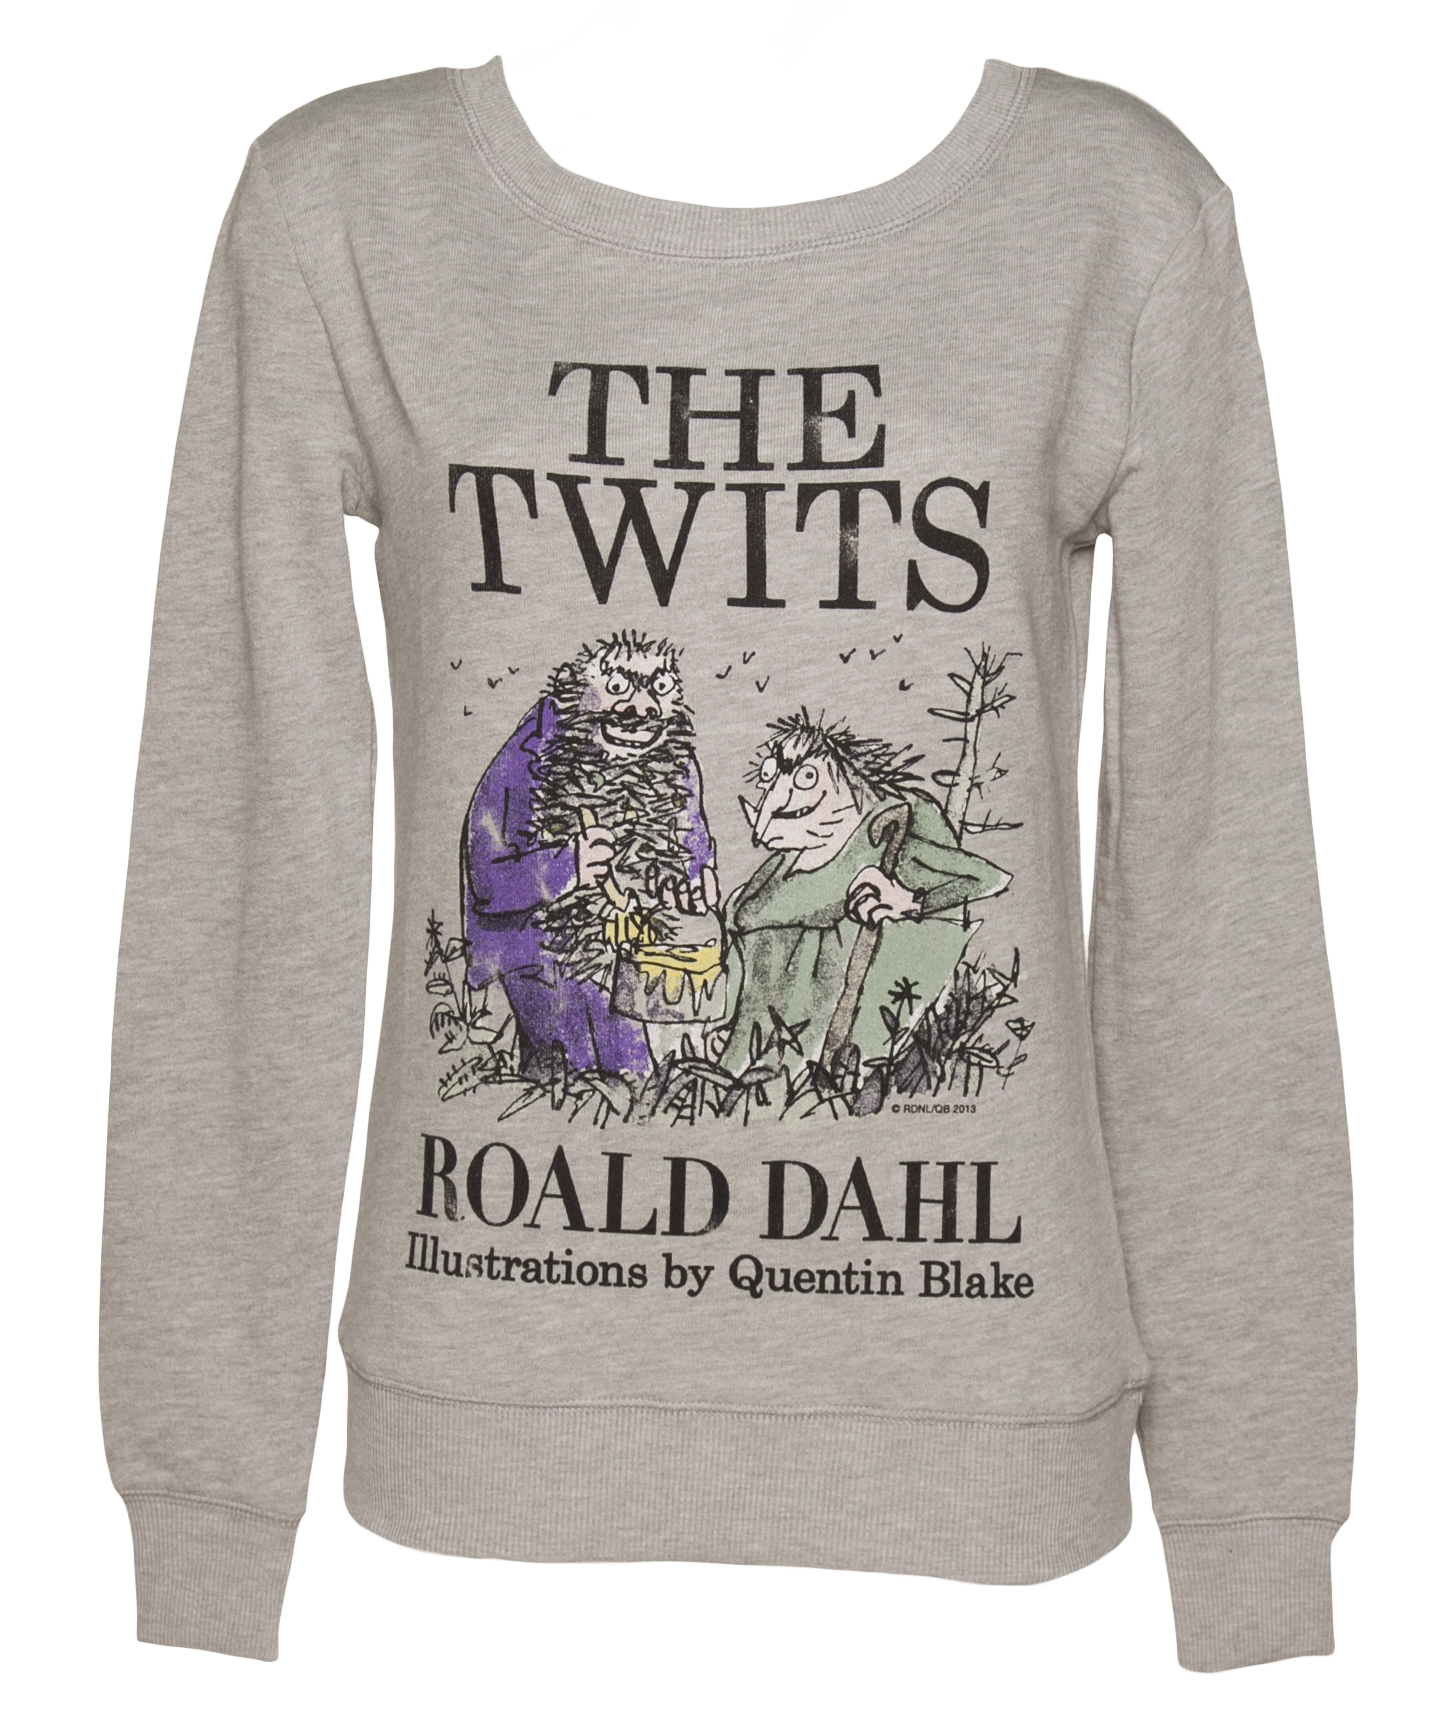 Ladies Roald Dahl The Twits Sweater